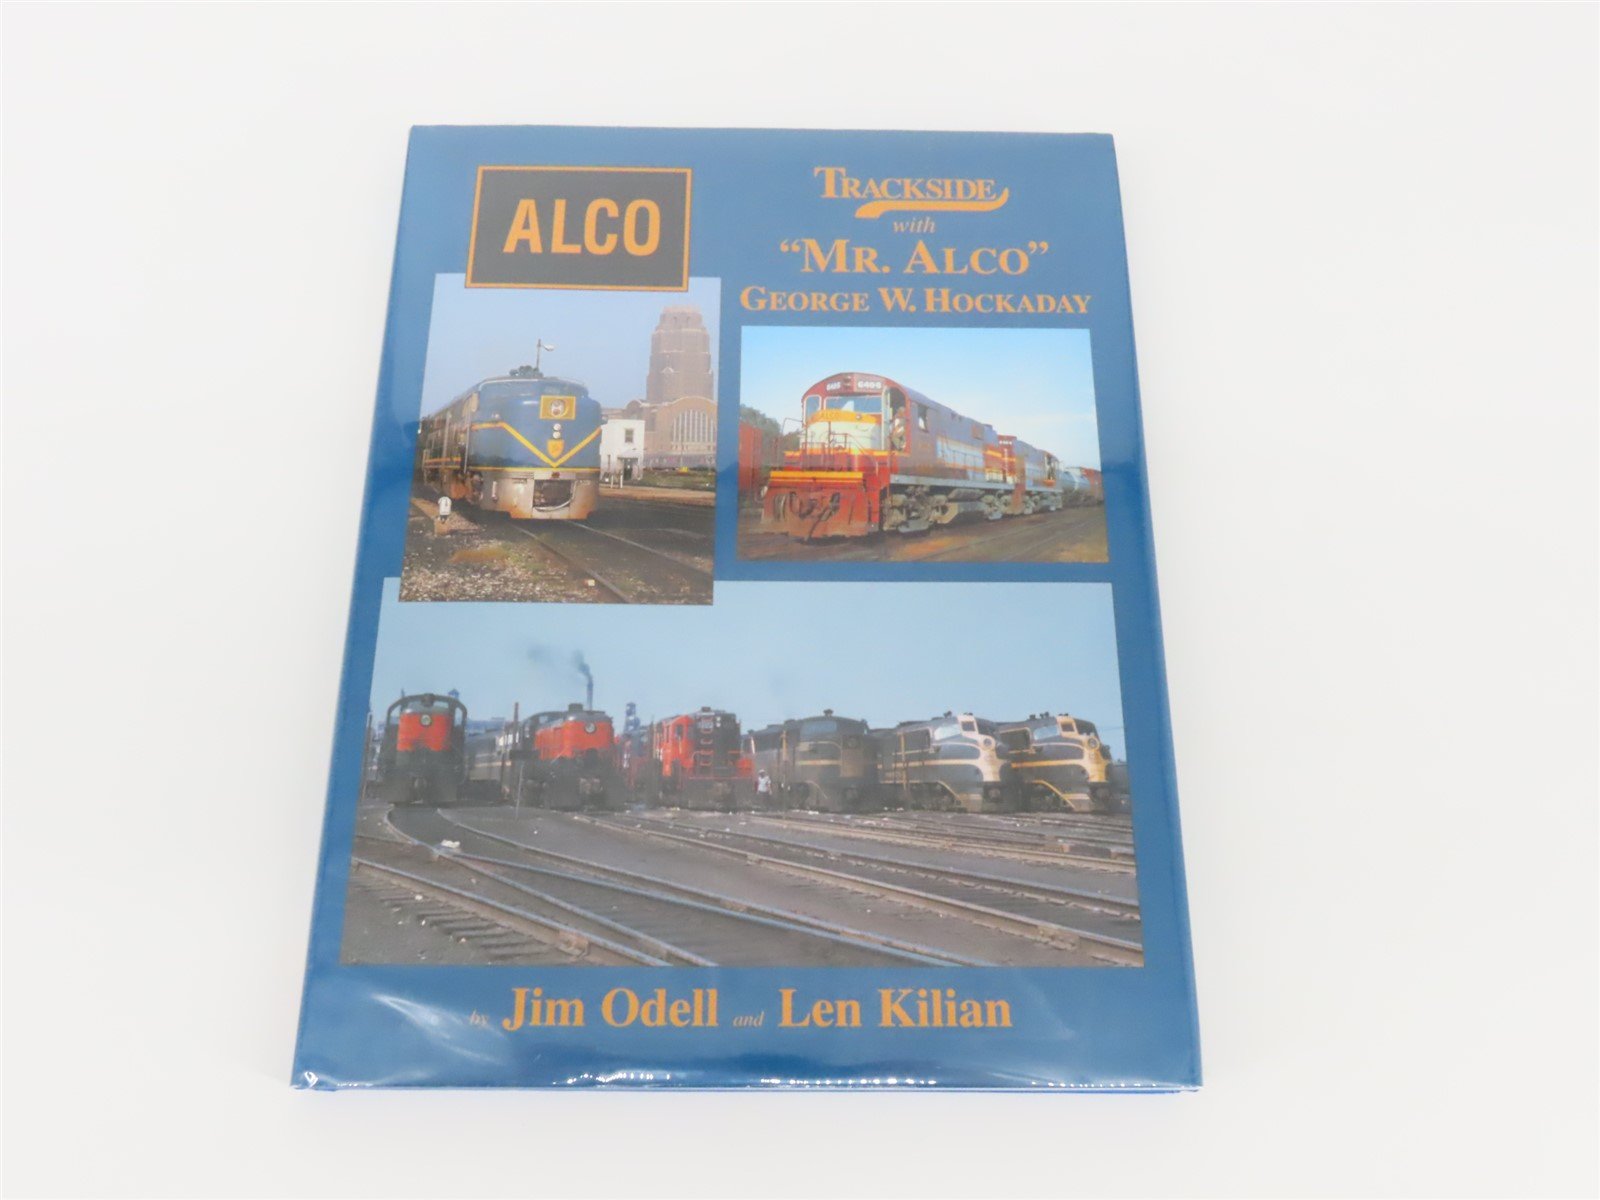 Morning Sun: Trackside With "Mr Alco" by Jim Odell & Len Kilian ©2007 HC Book